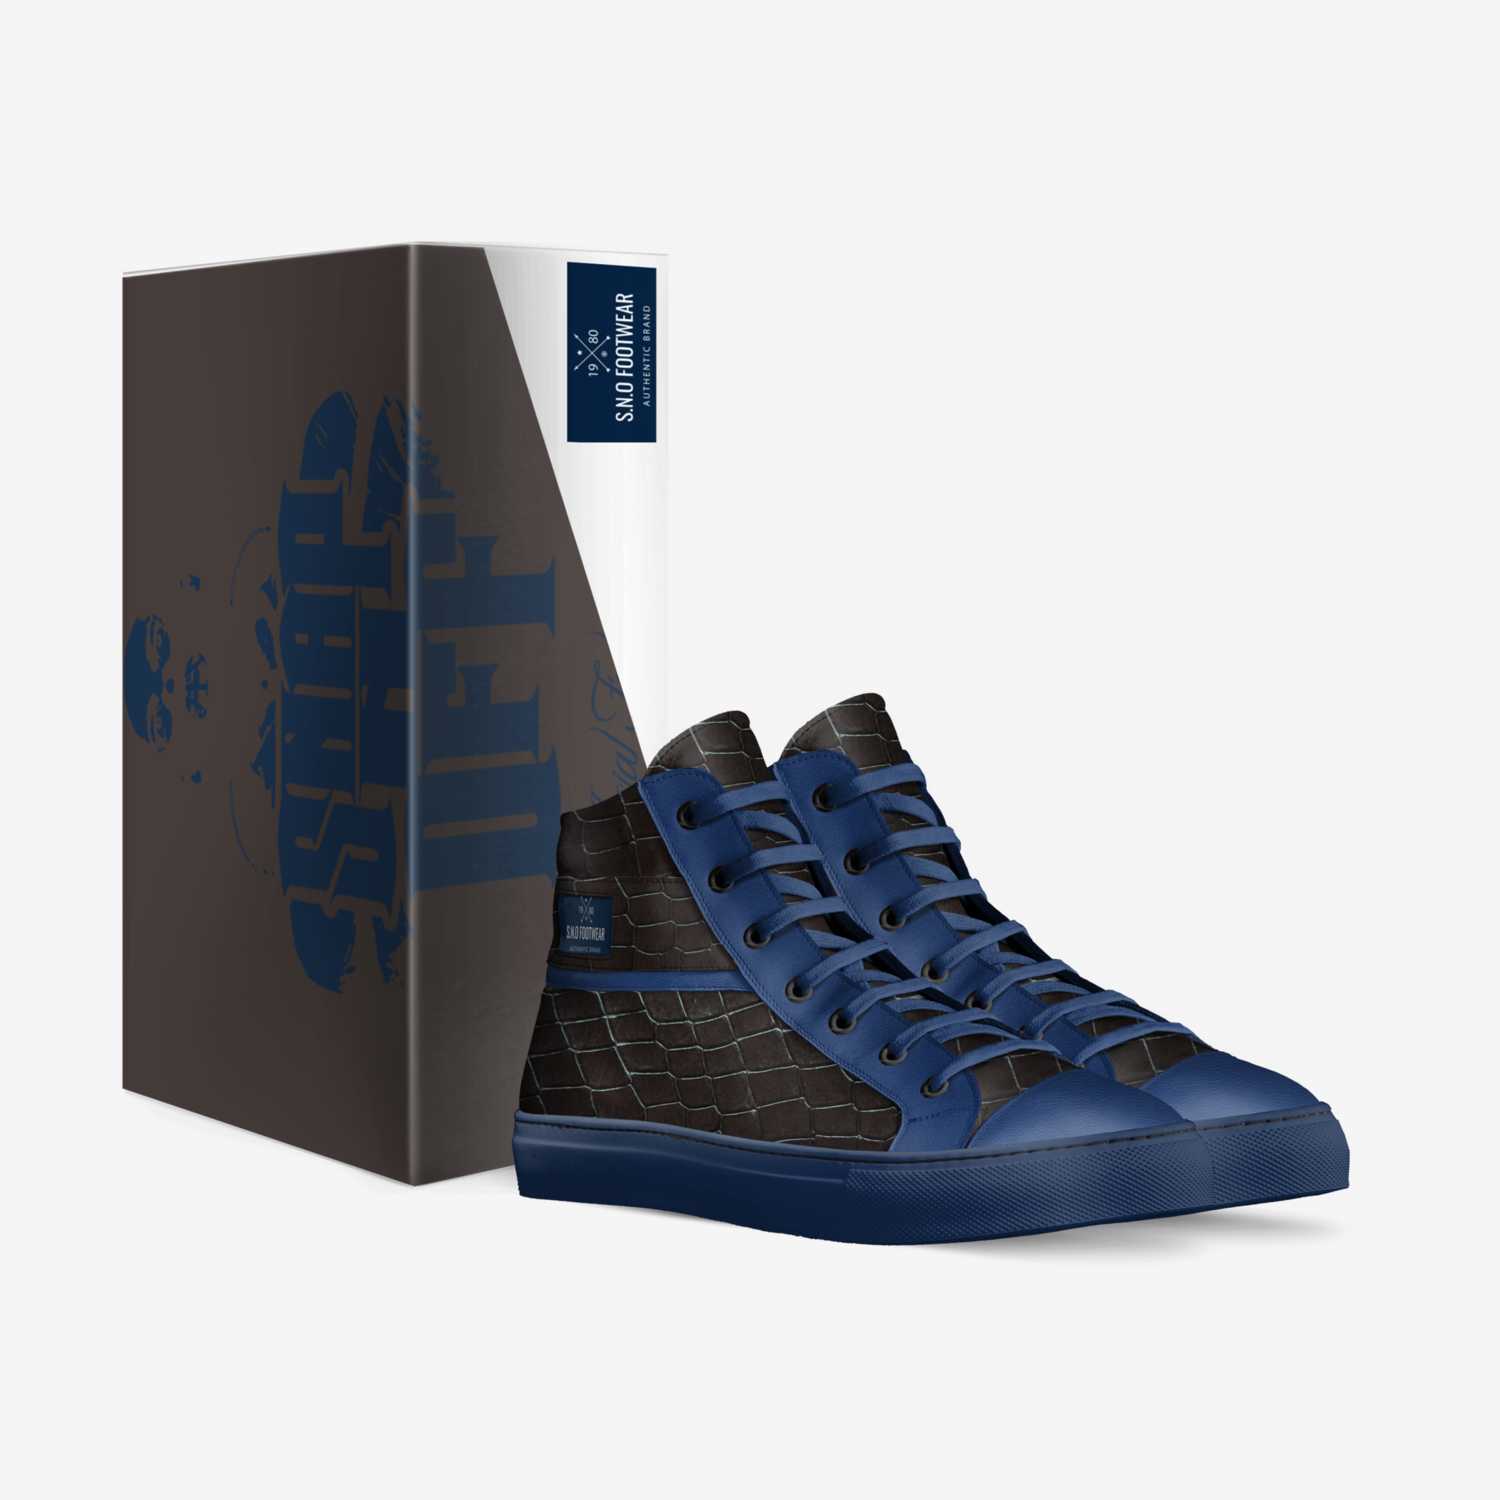 S.N.O FOOTWEAR  custom made in Italy shoes by Zeanetta Bradley | Box view